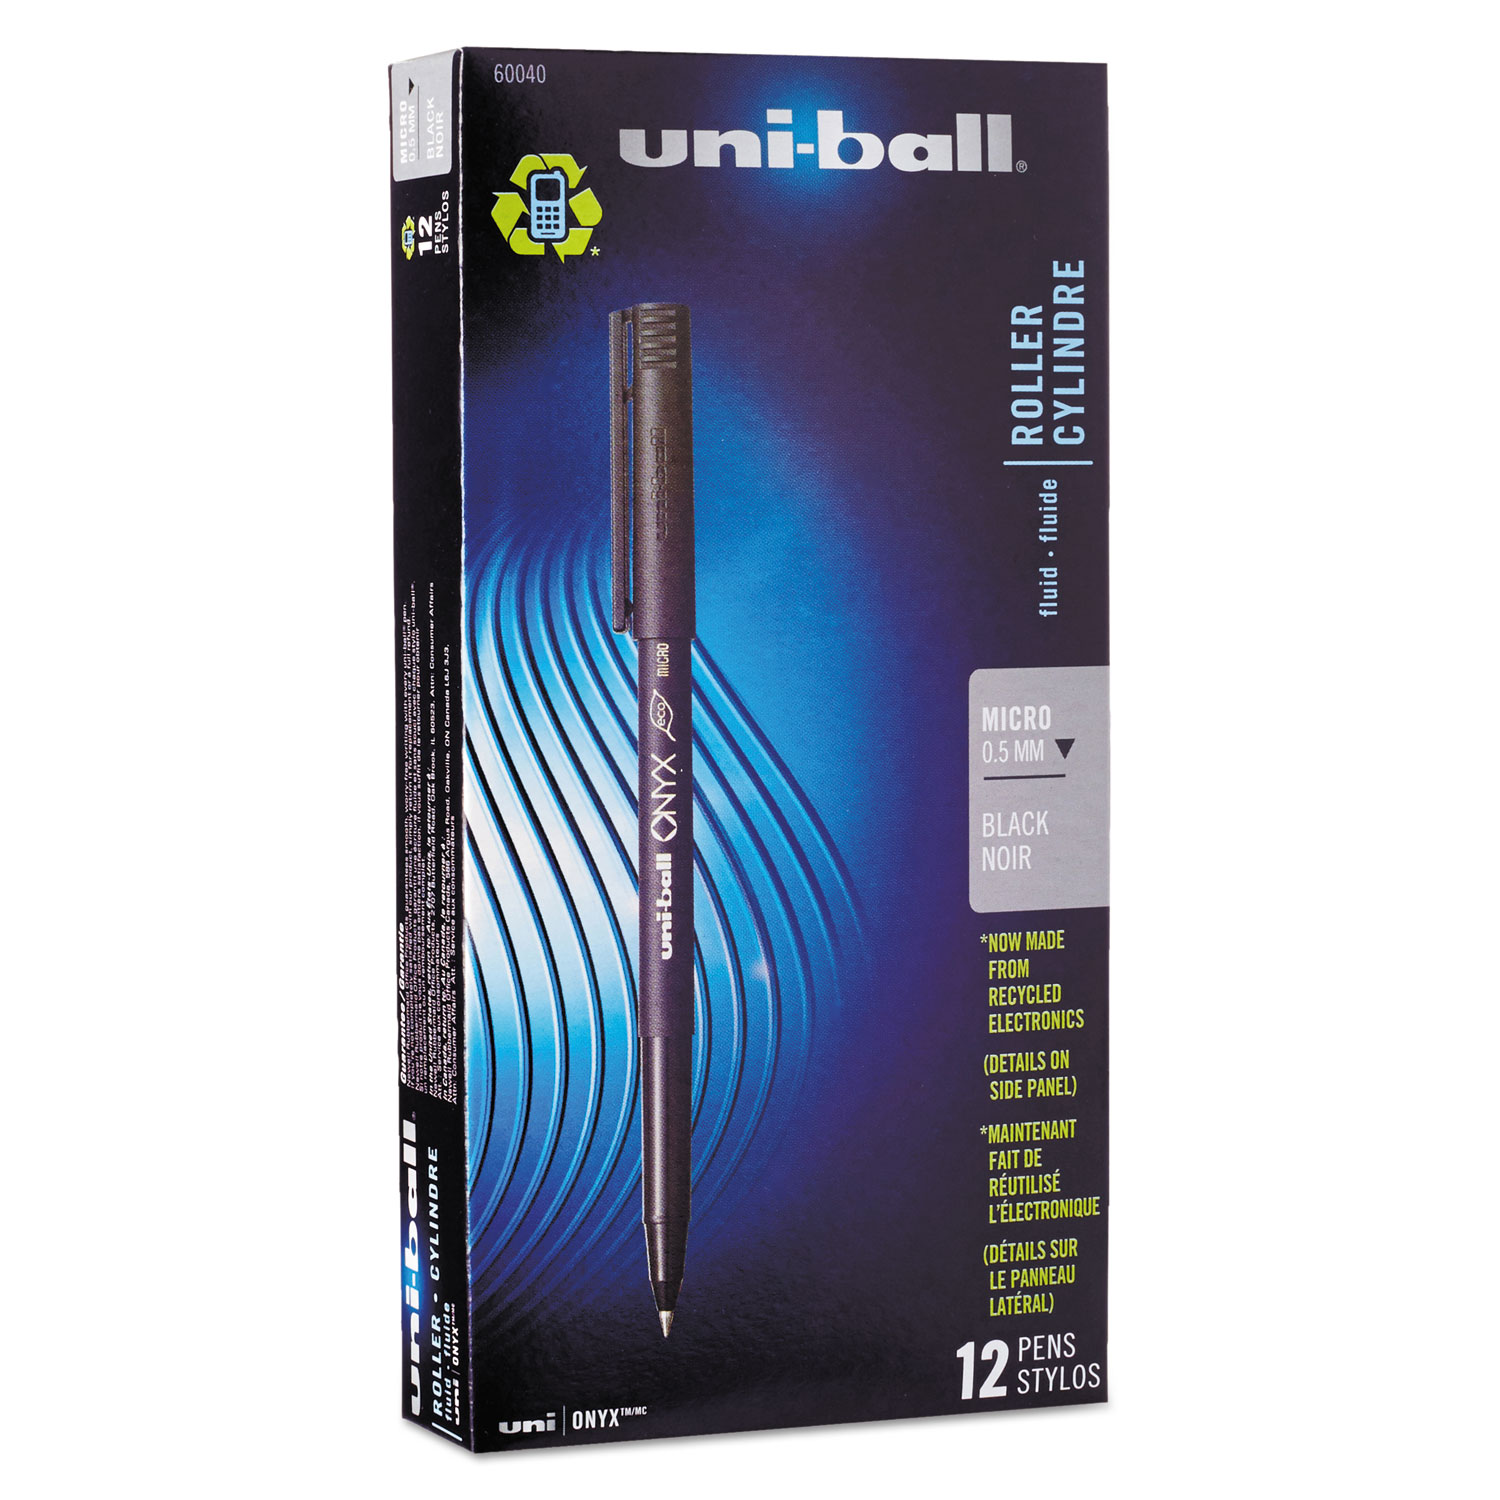  uni-ball 60040 ONYX Stick Roller Ball Pen, Micro 0.5mm, Black Ink, Black Matte Barrel, Dozen (UBC60040) 